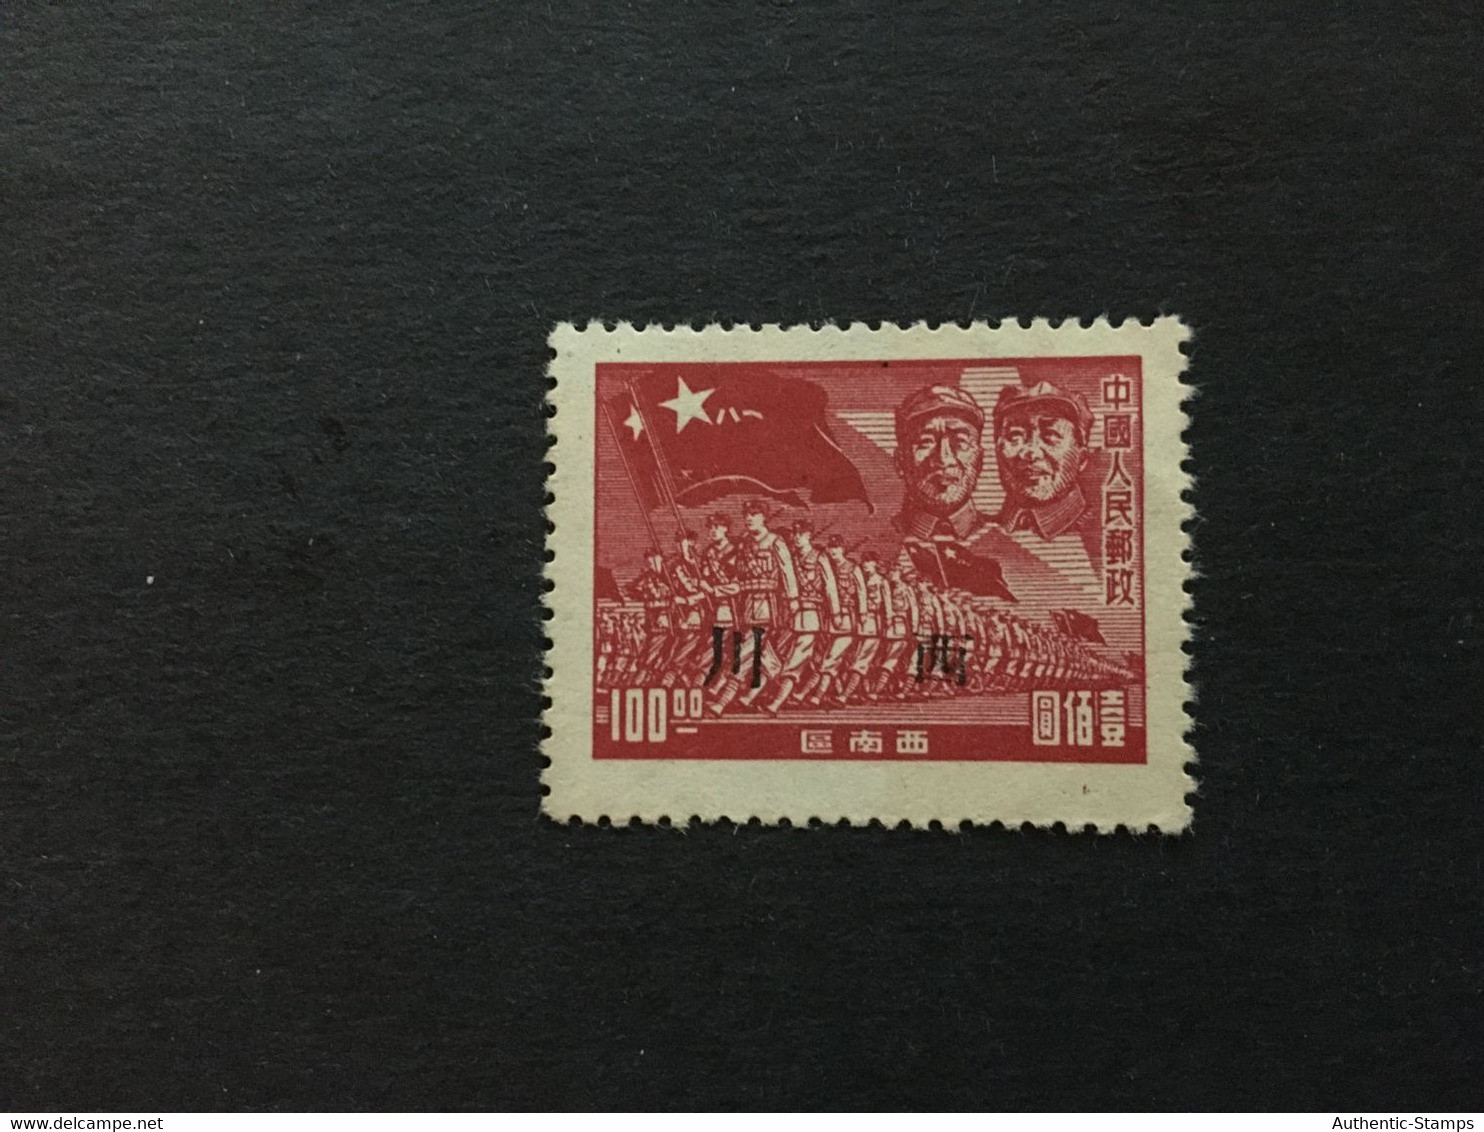 1950  CHINA  STAMP, Rare Overprint, Western Sichuan, TIMBRO, STEMPEL, UnUSED, CINA, CHINE, LIST 2957 - Südwestchina 1949-50